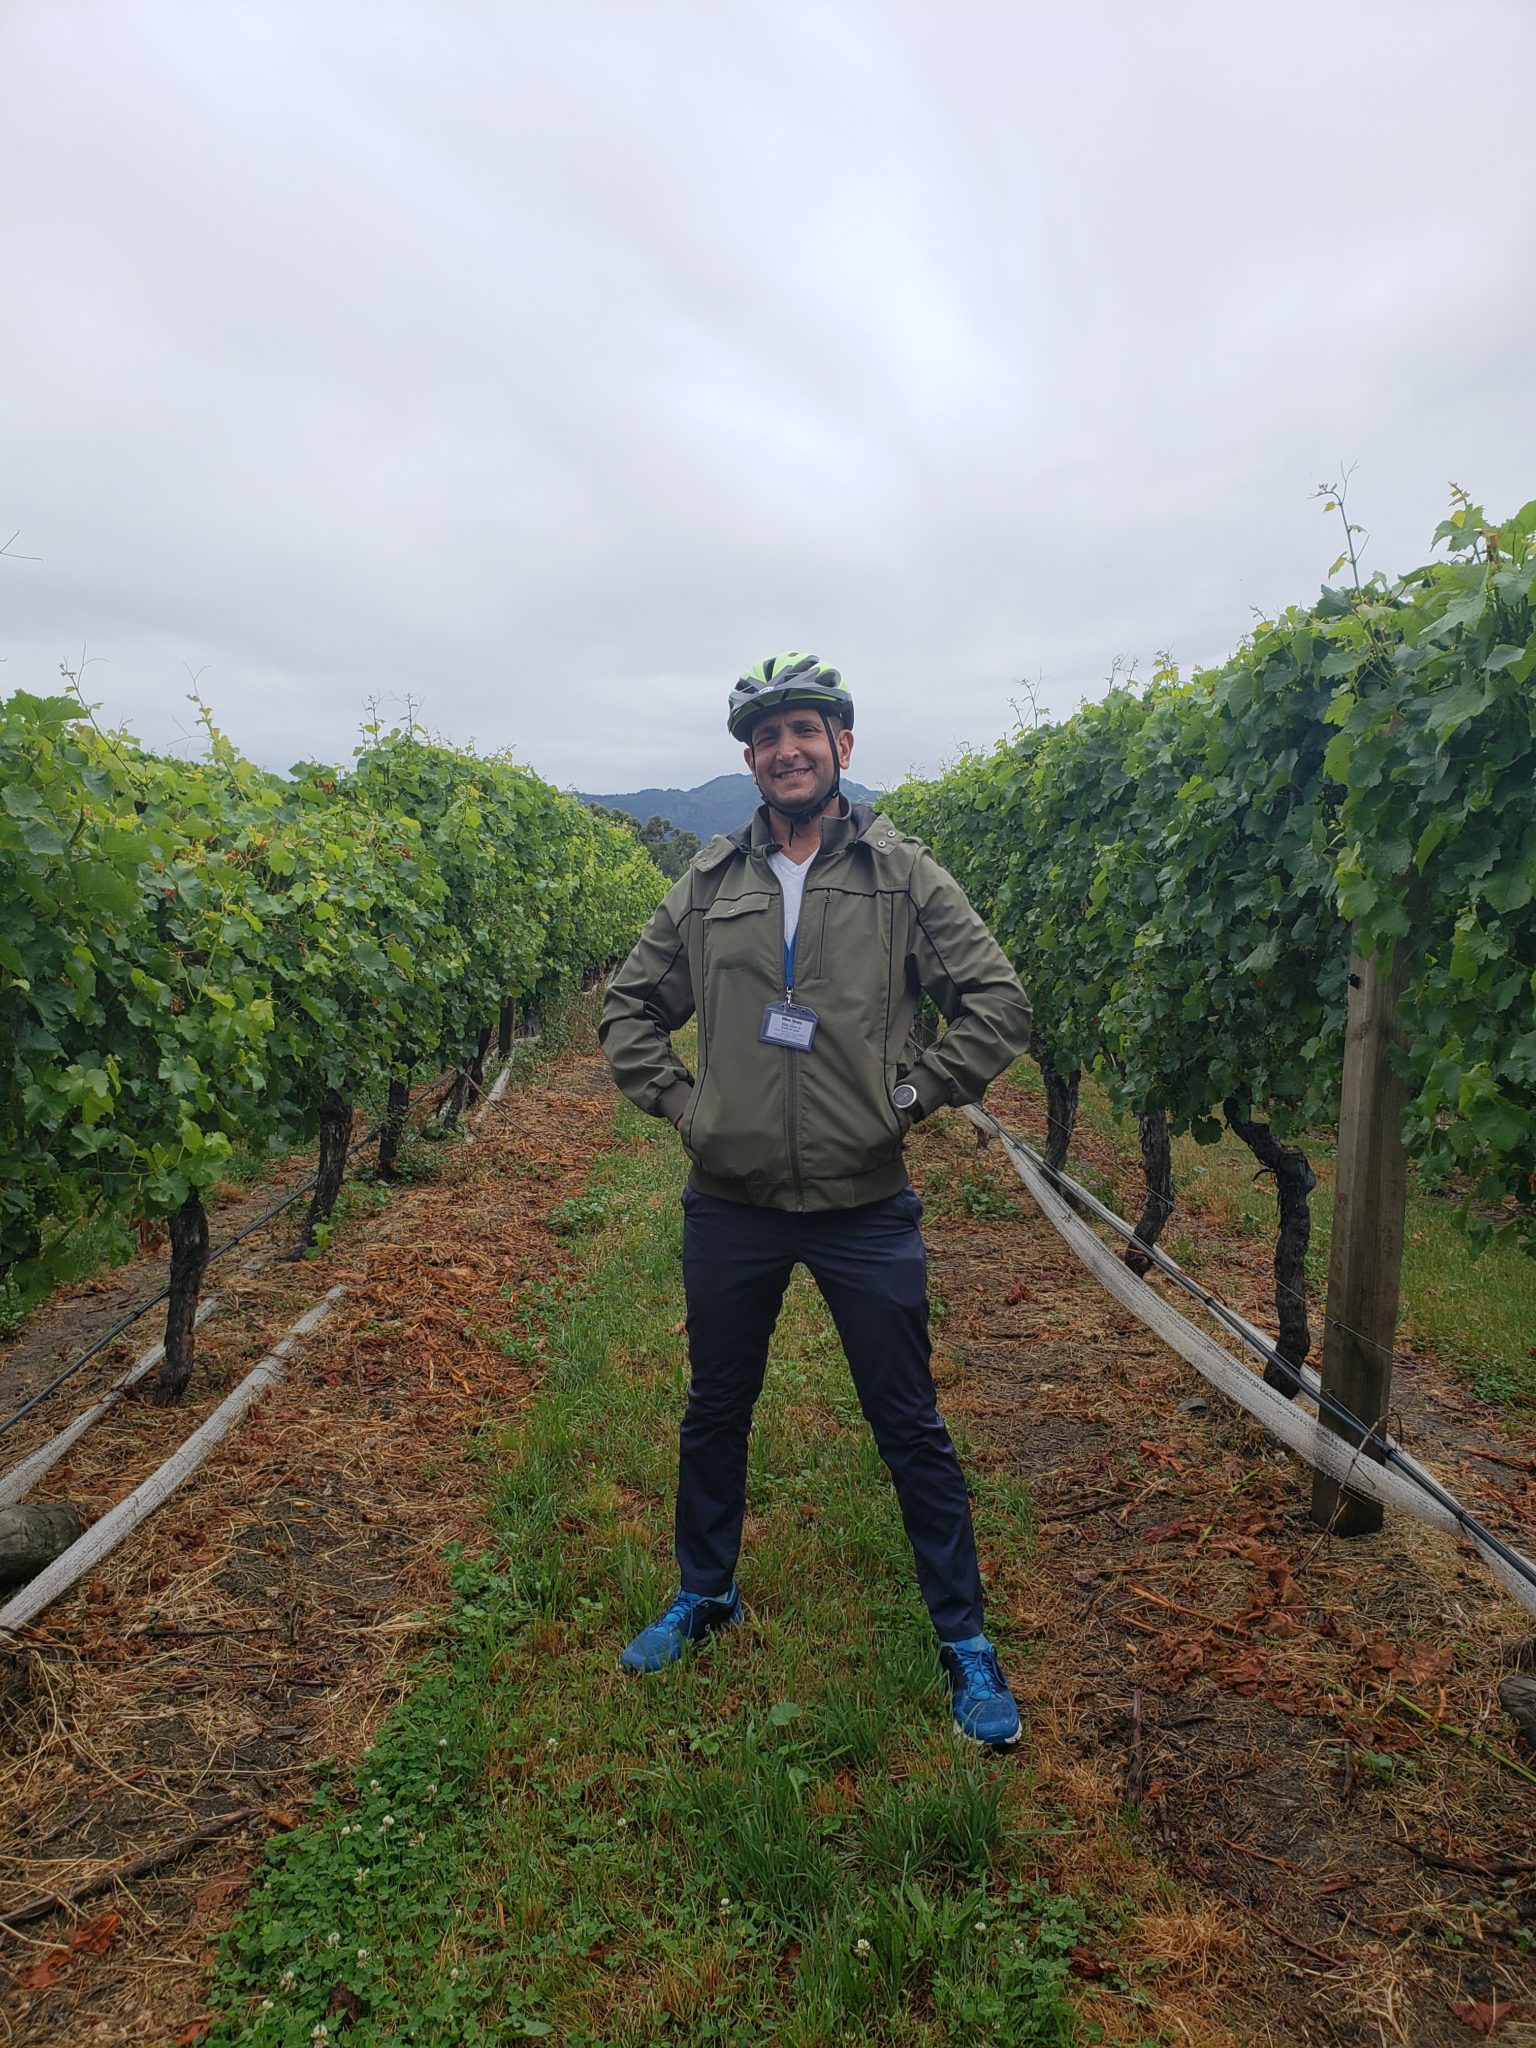 a man standing in a vineyard